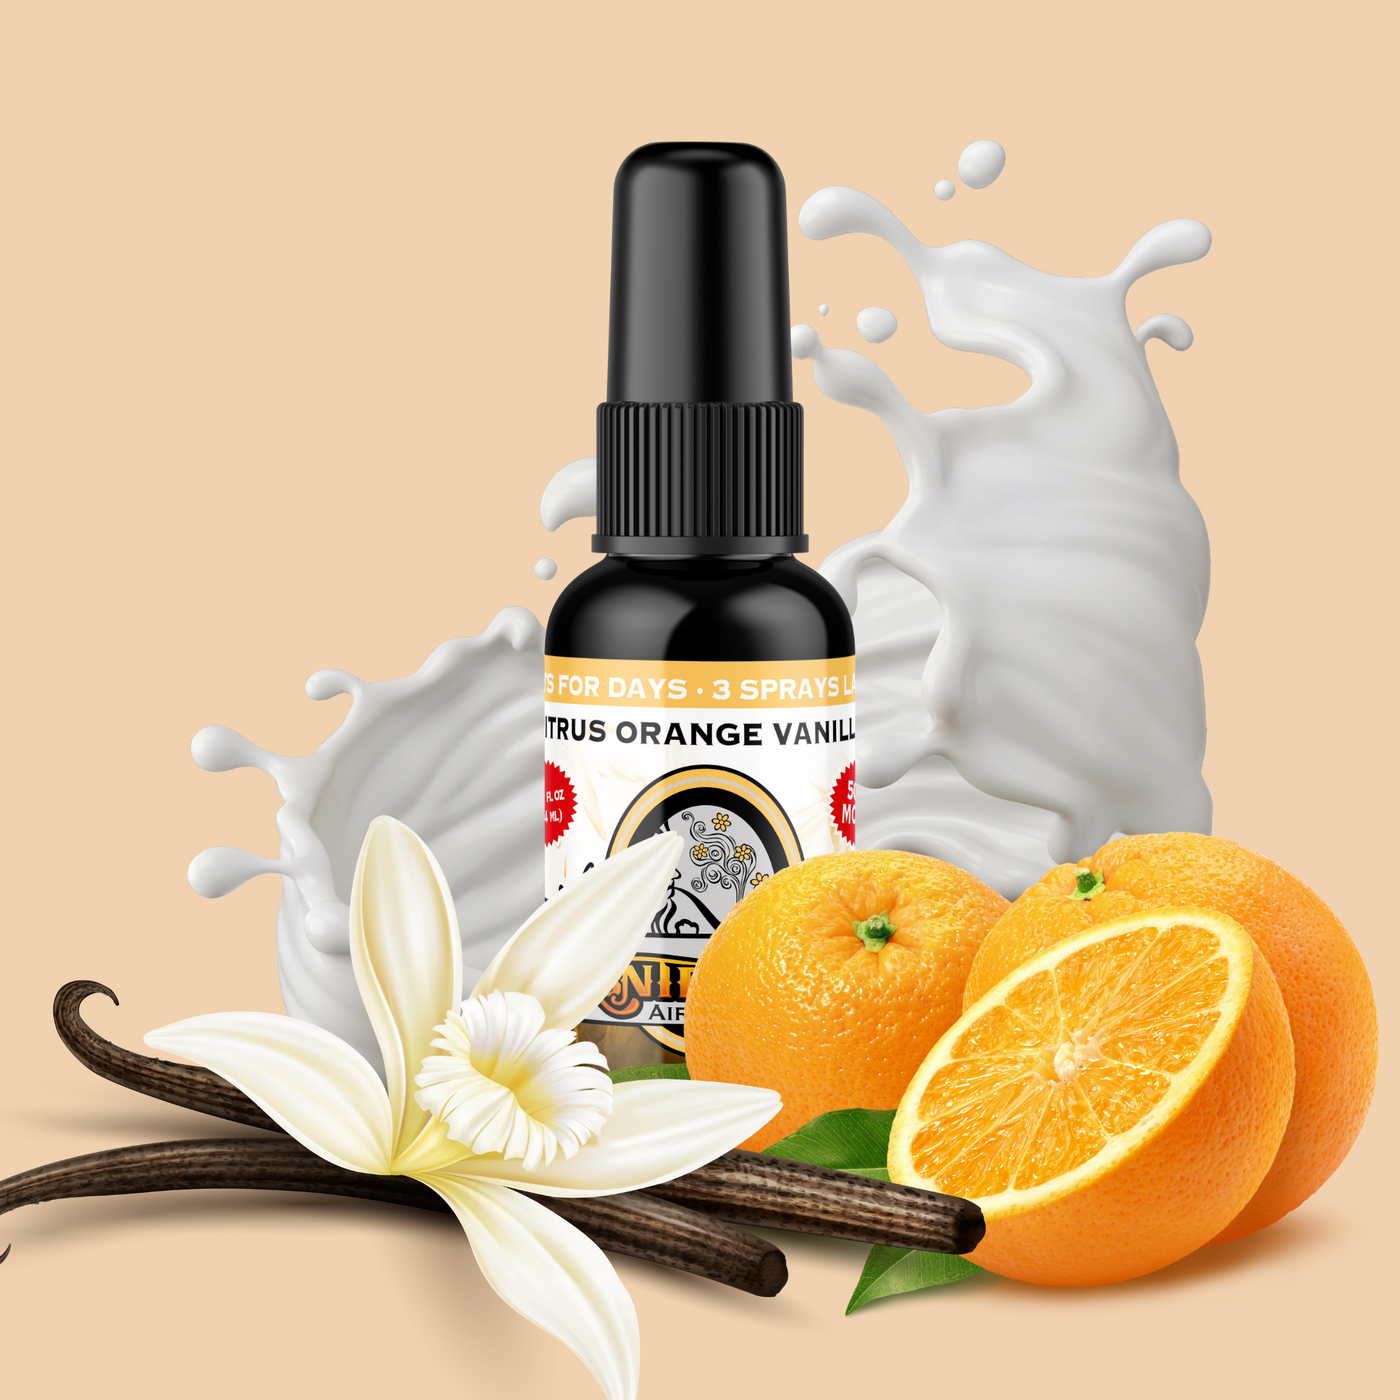 Citrus Orange Vanilla Air Freshener Spray